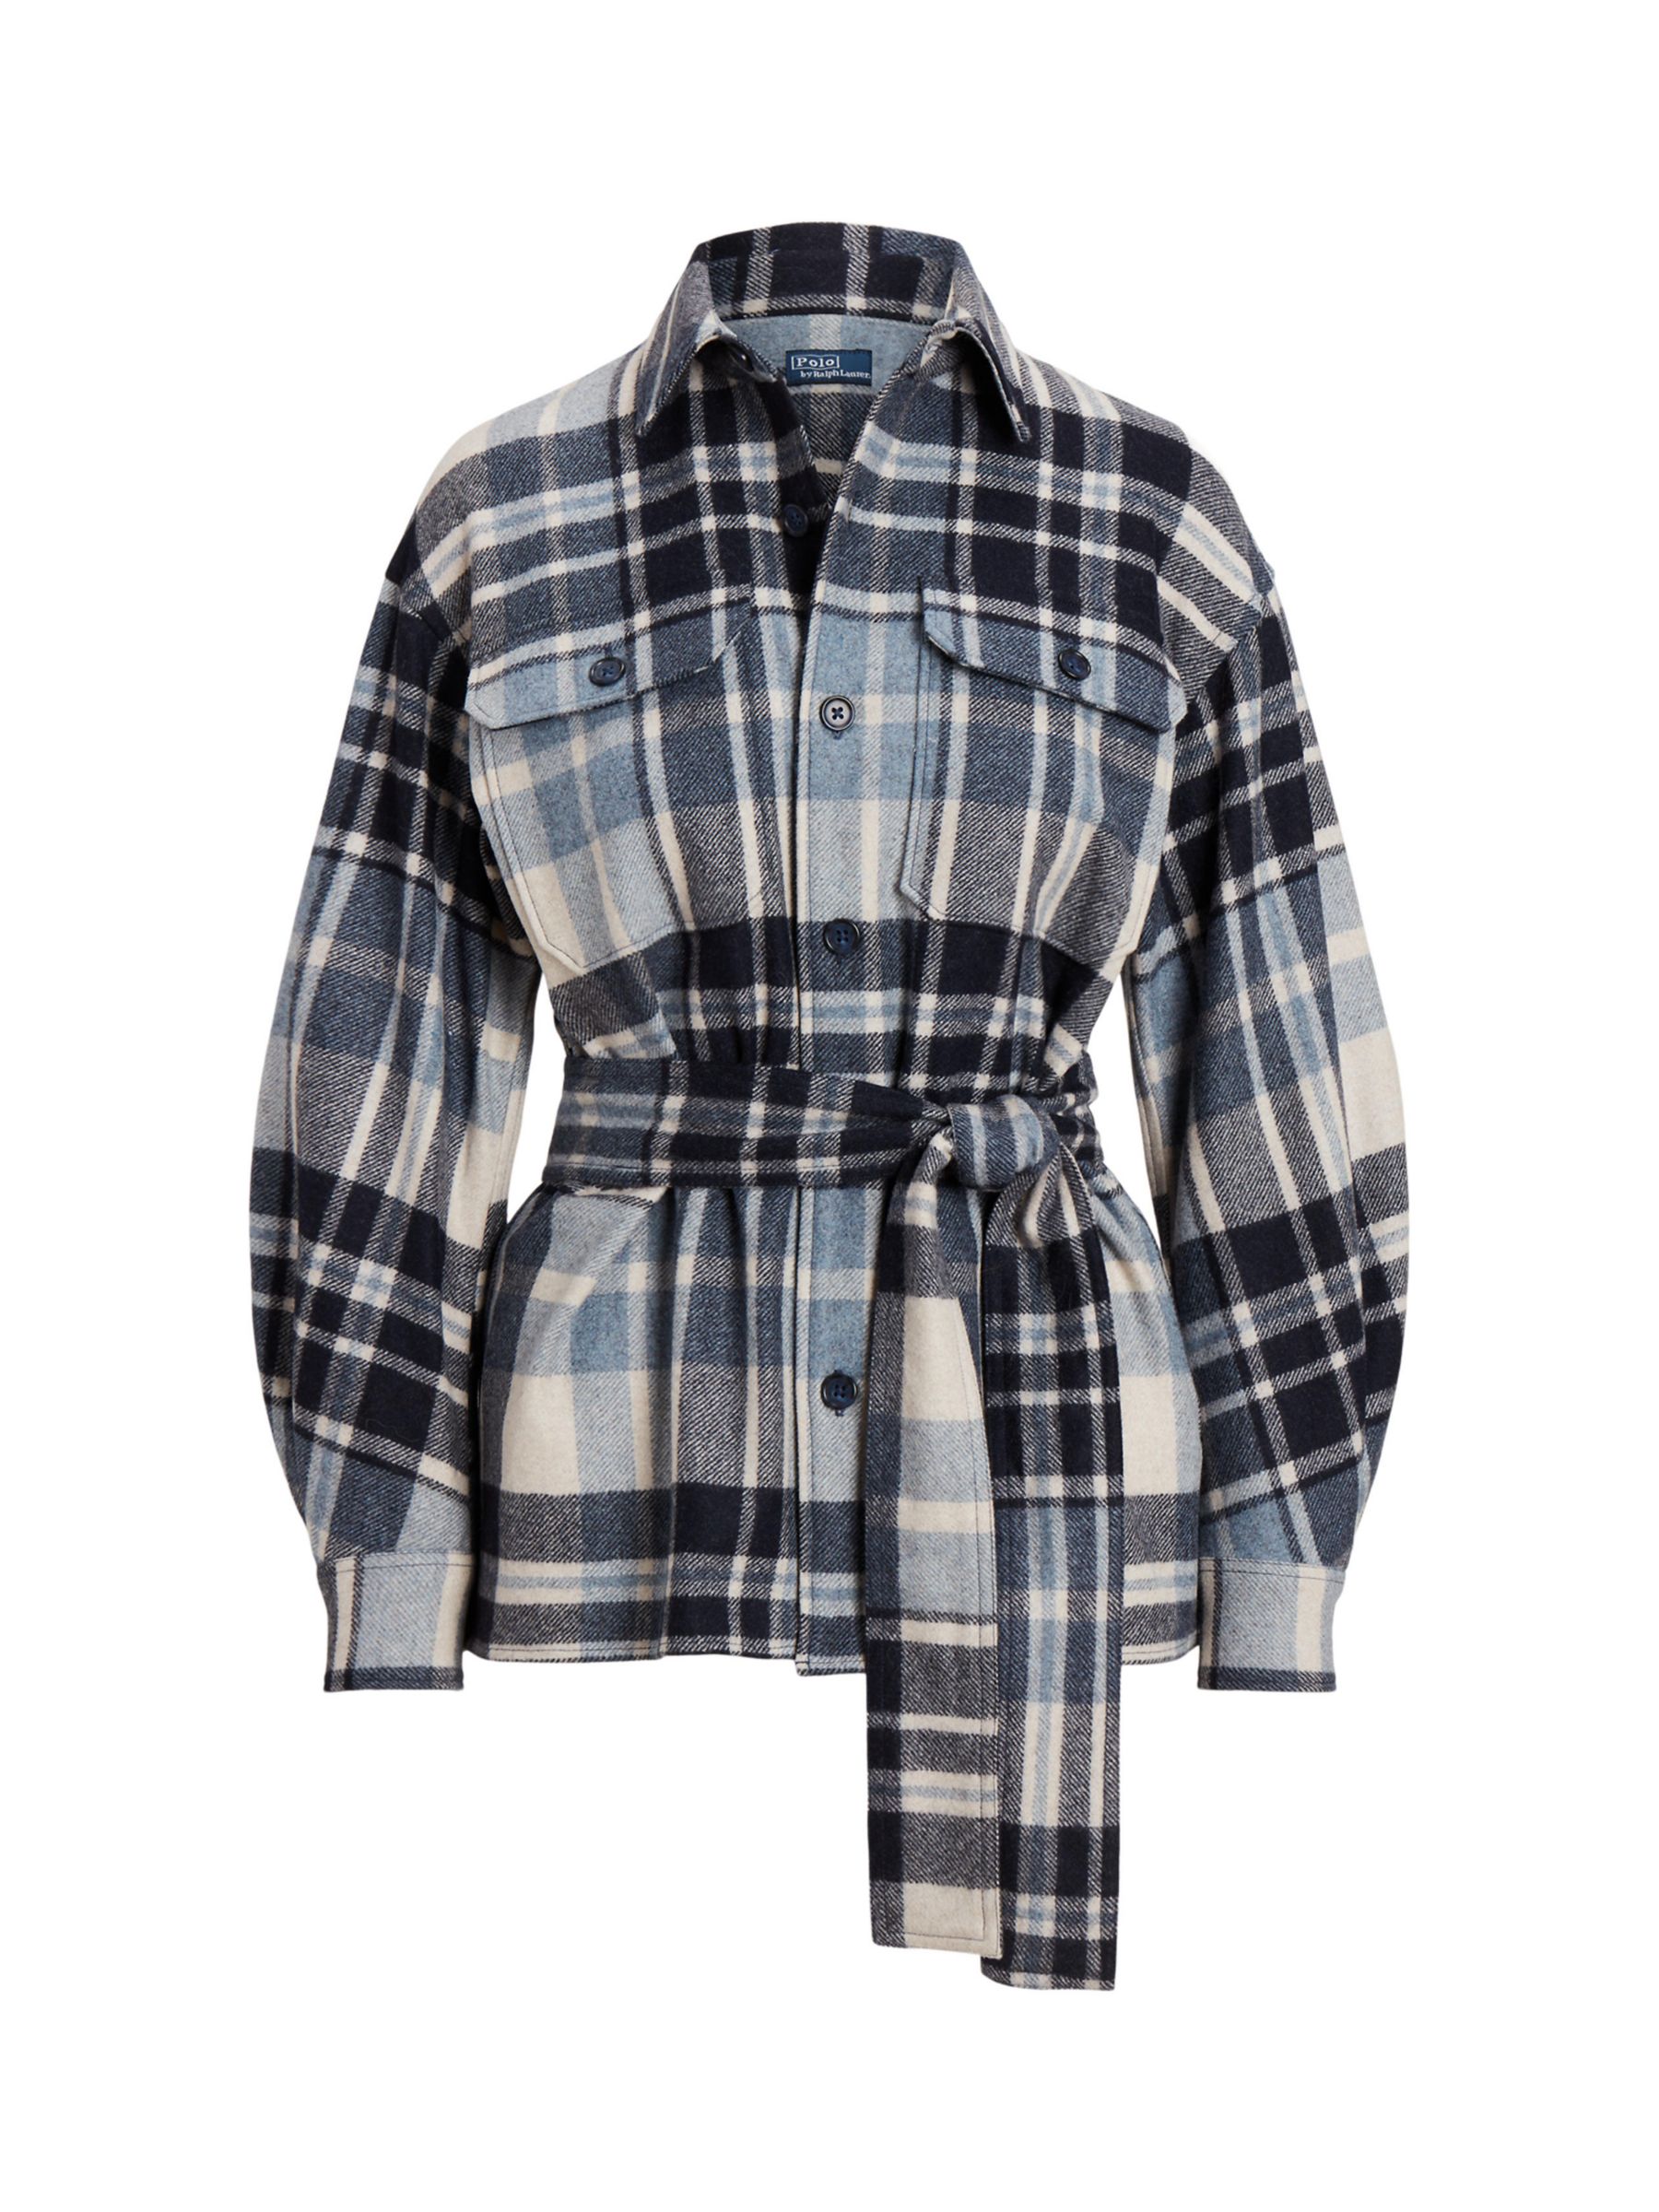 Buy Polo Ralph Lauren Belted Wool Blend Check Shirt, Blue/Multi Online at johnlewis.com